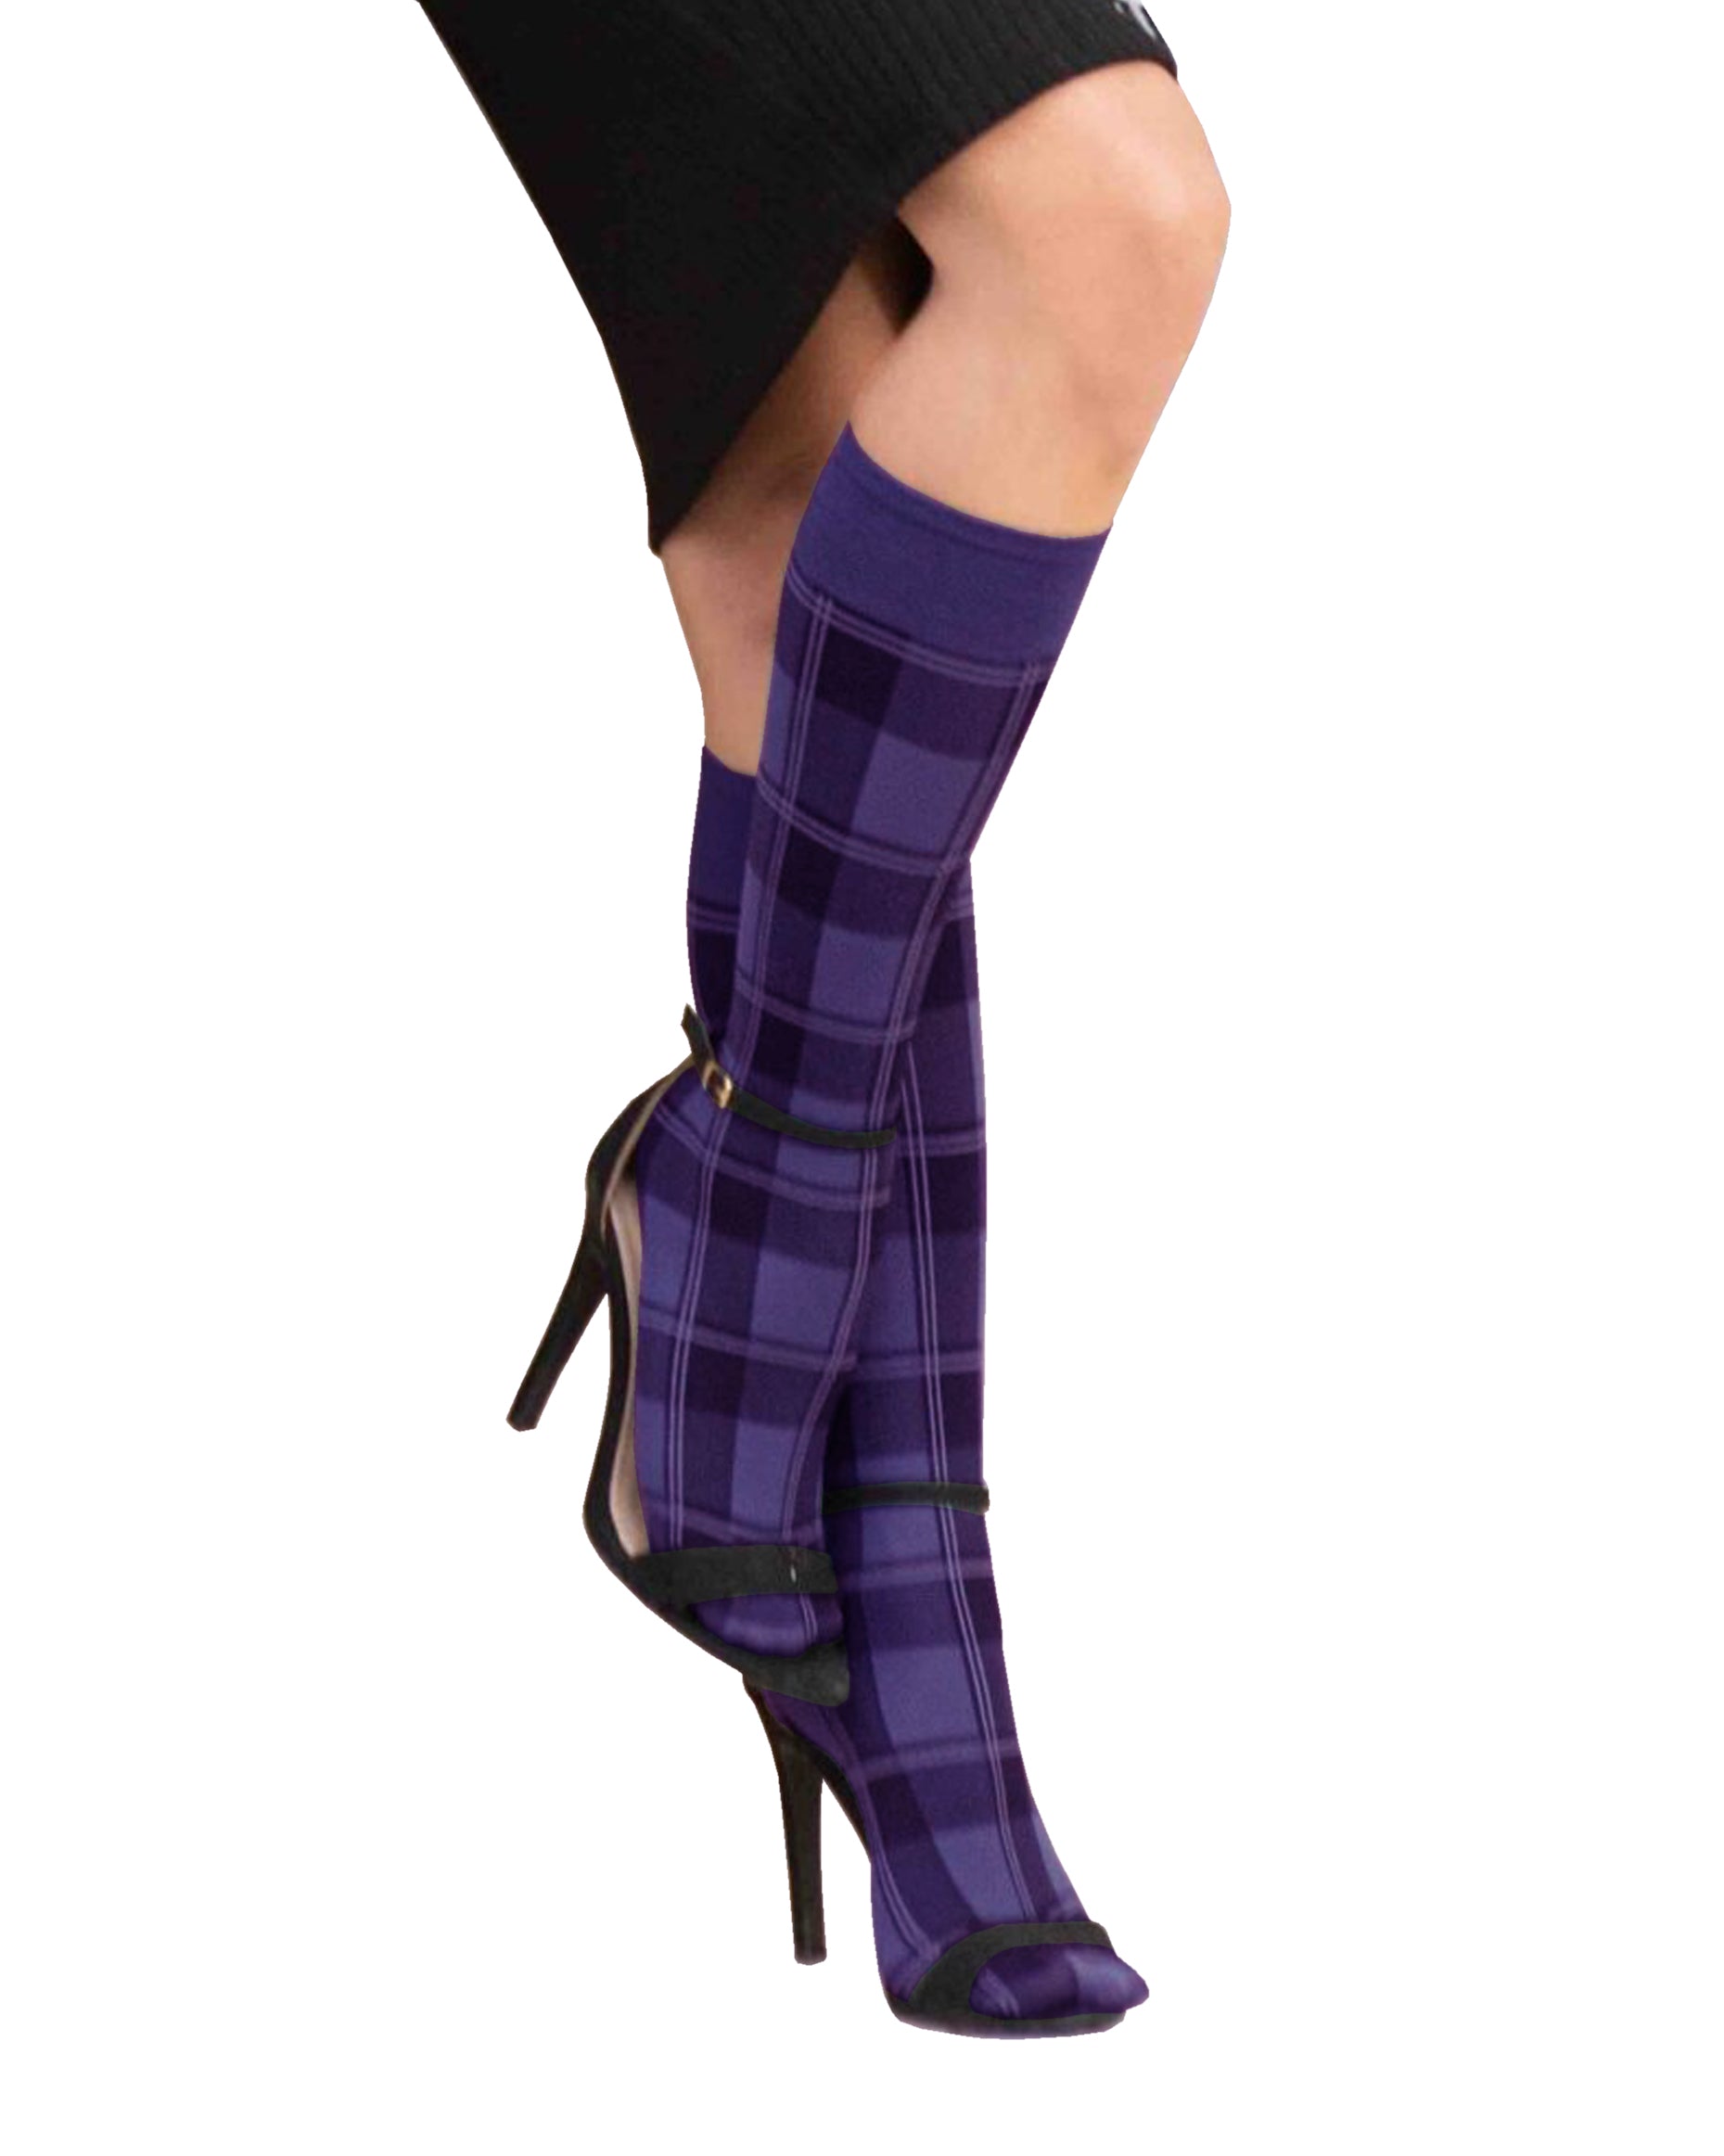 Omero Tartan 50 Gambaletto - Purple opaque fashion knee-high socks with a black woven tartan style pattern and deep comfort cuff.